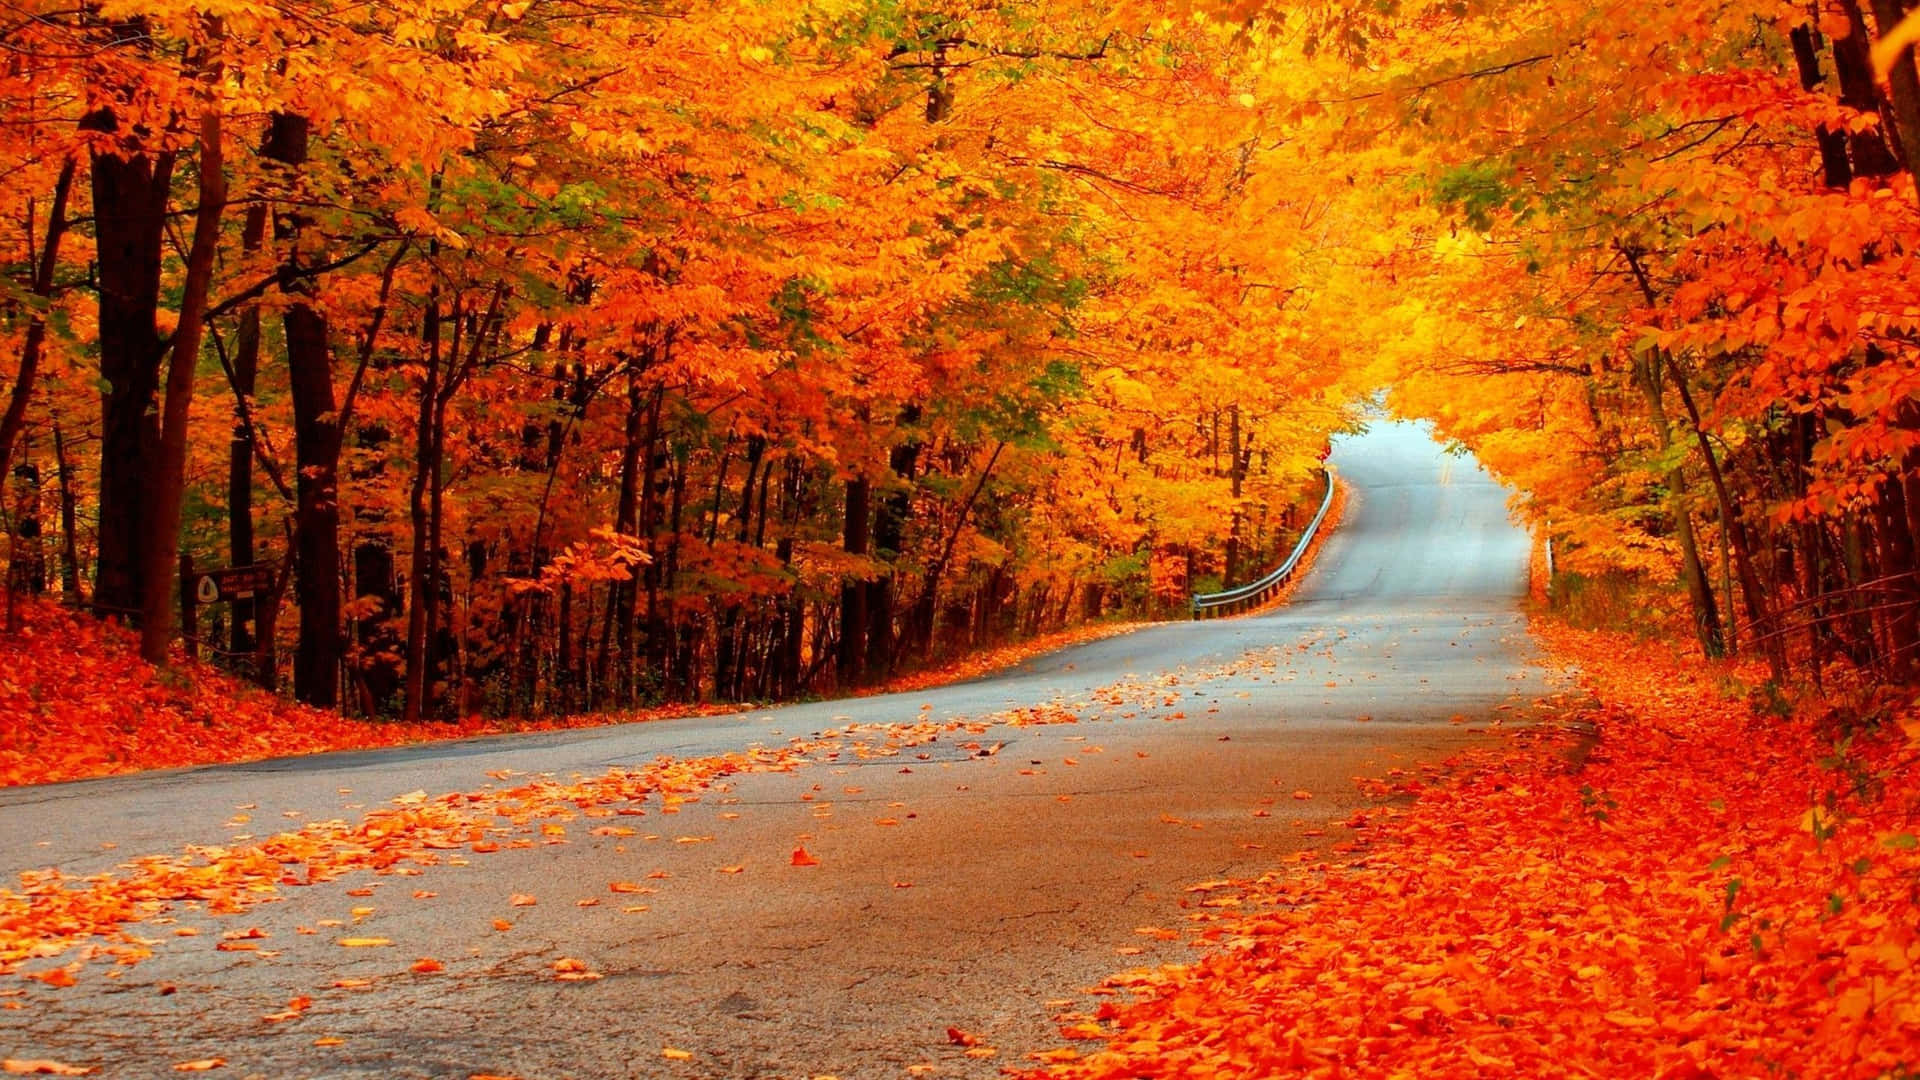 A breathtaking landscape of a vibrant autumn forest Wallpaper